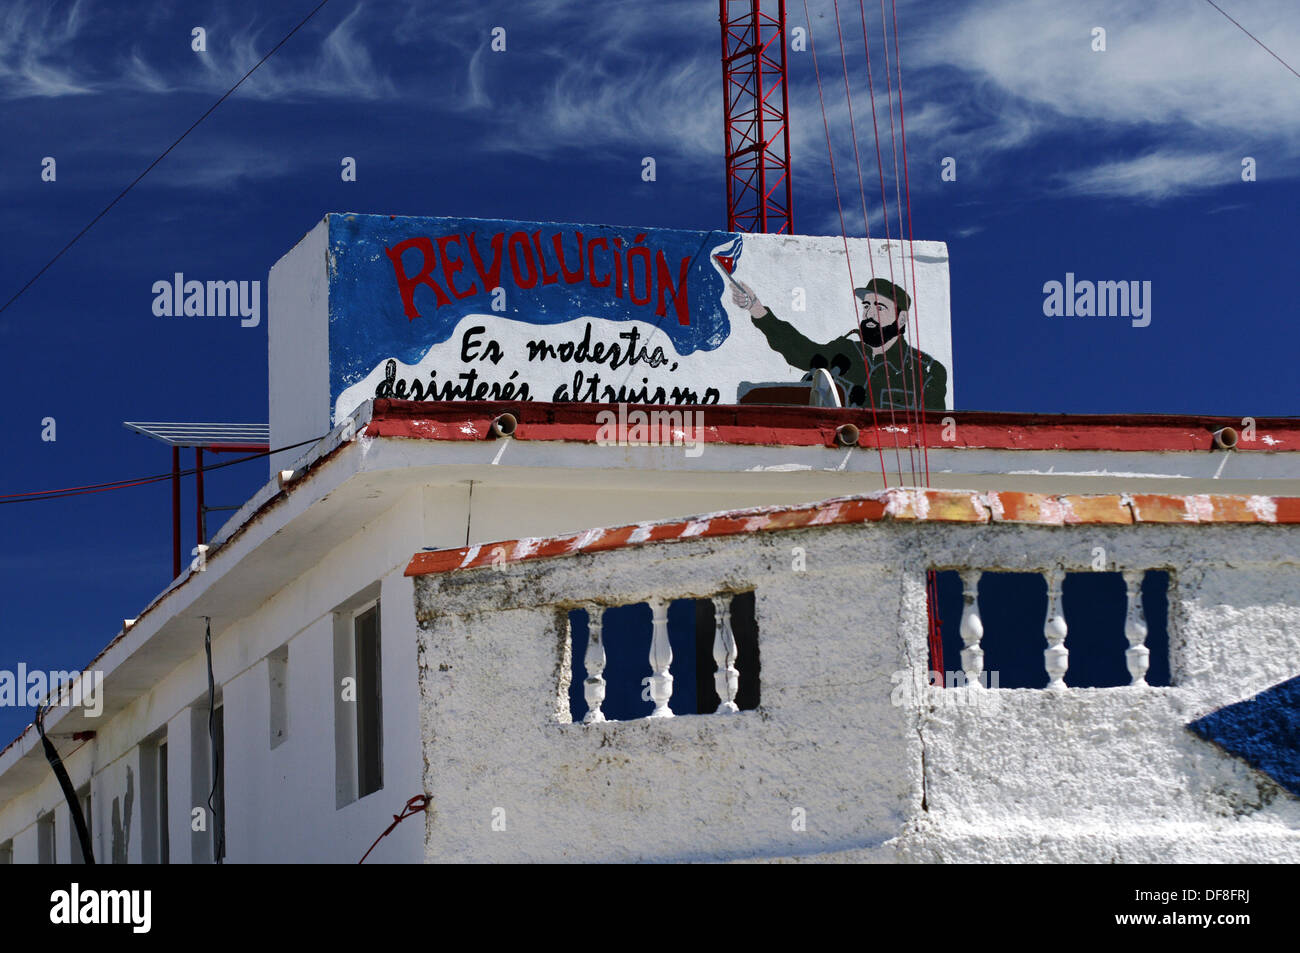 Post-revolutionary propaganda mural in Cuba Stock Photo